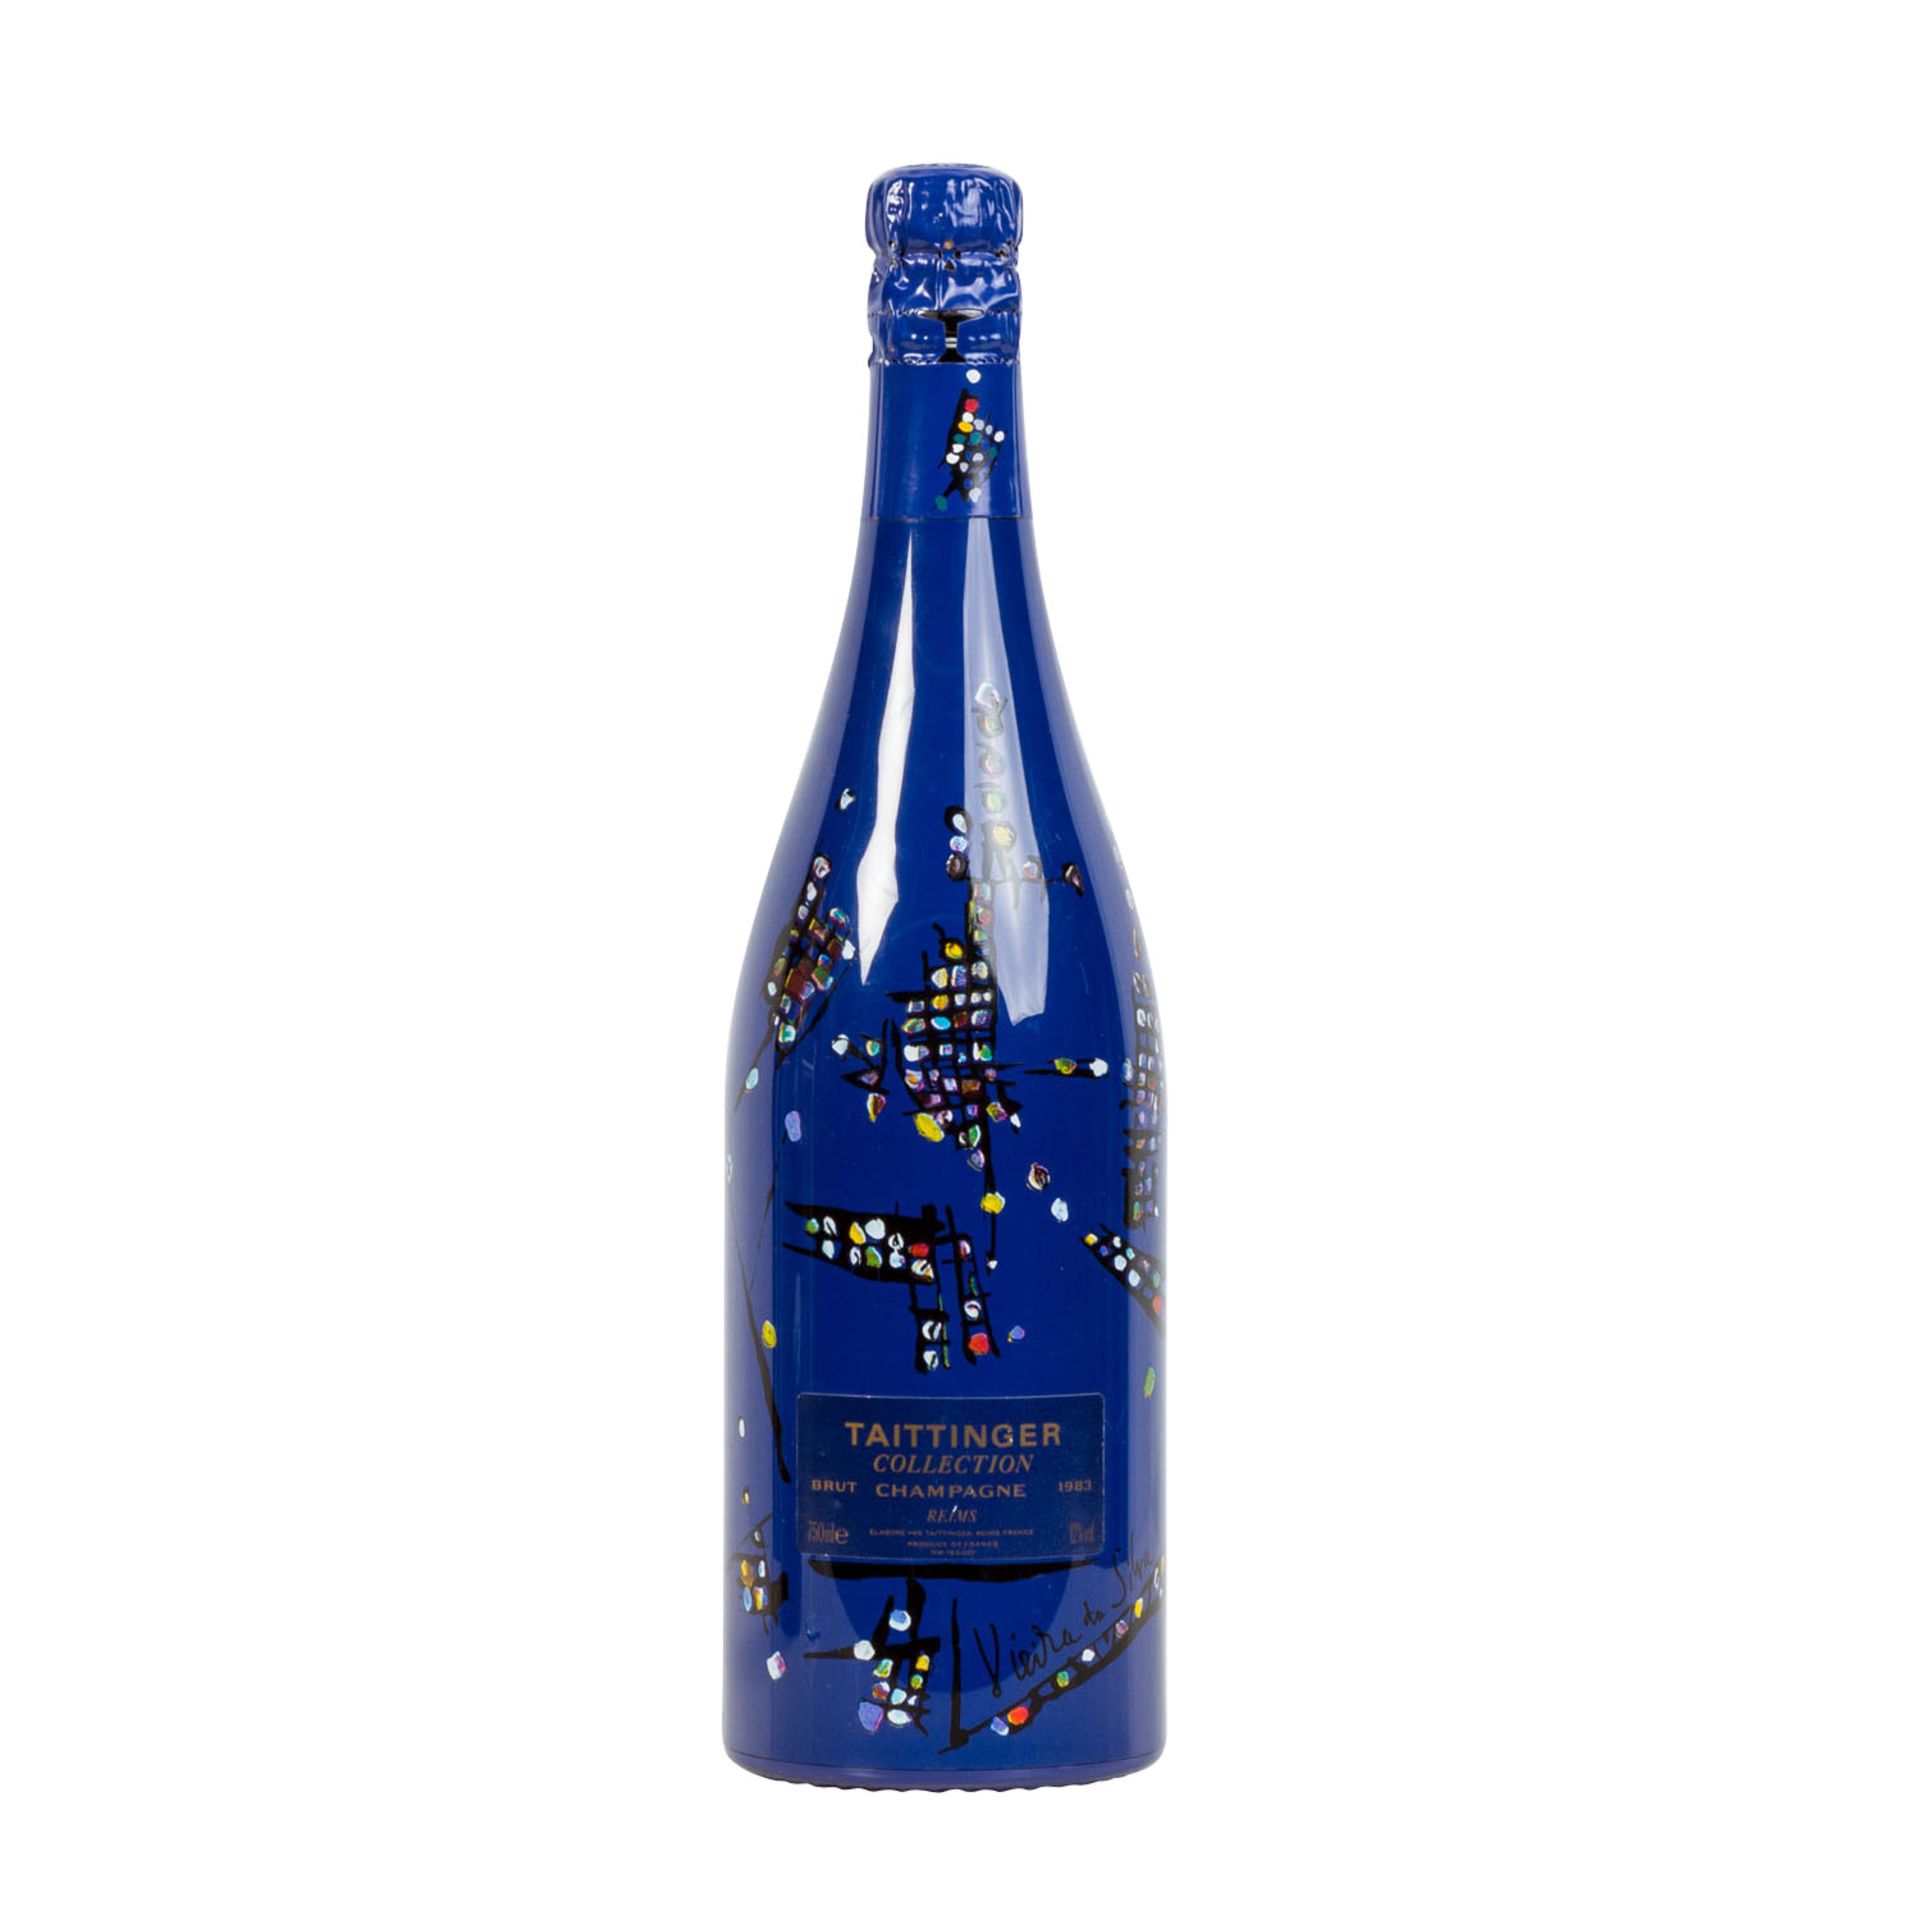 TAITTINGER Champagner 'Collection' 1983 'Vieira da Silva', Brut,France, 12% Vol., 750ml. NO SHIPPING